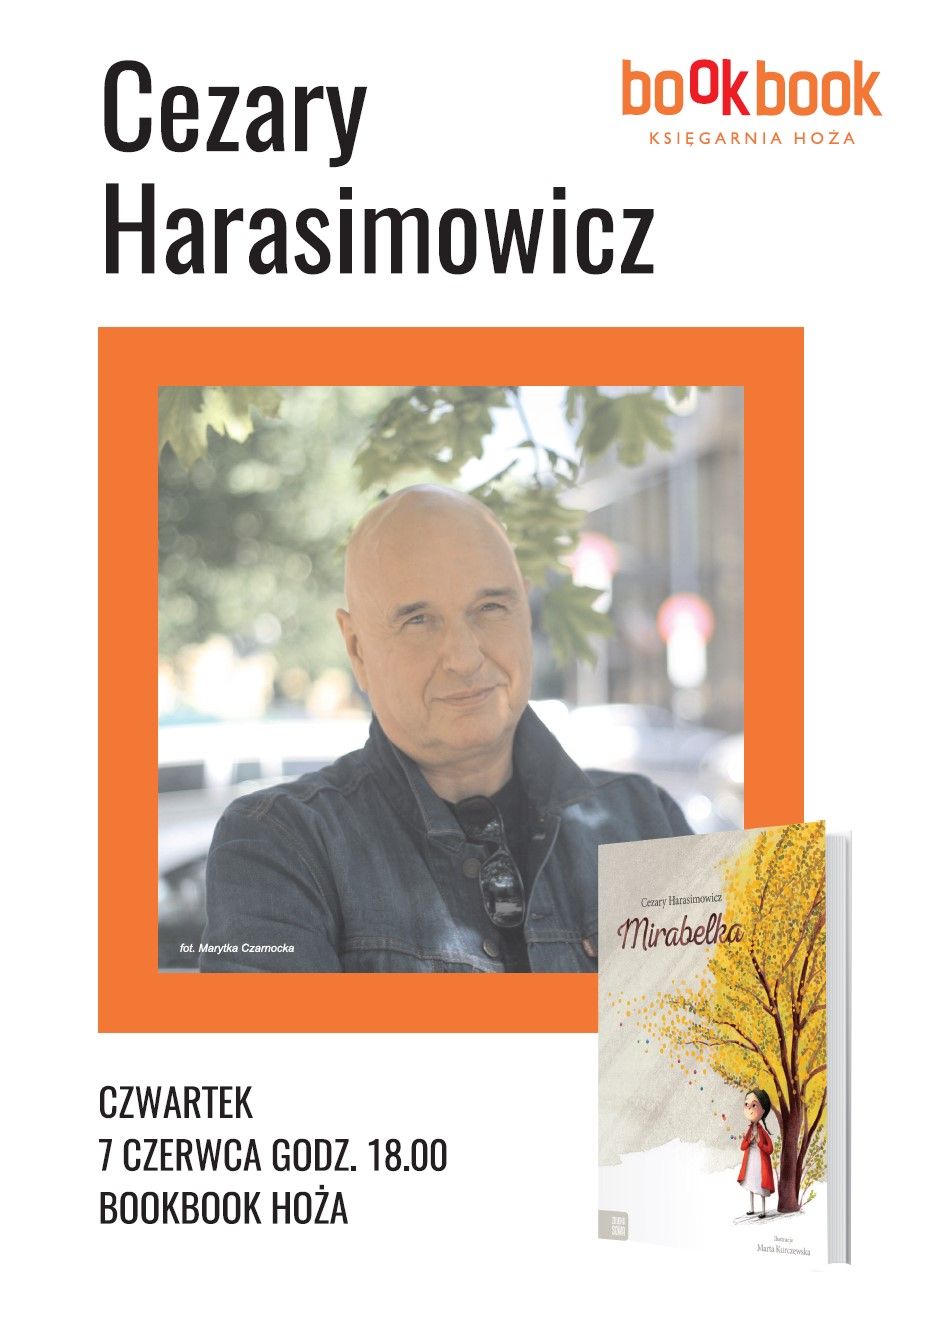 BookBook, Cezary Harasimowicz, 